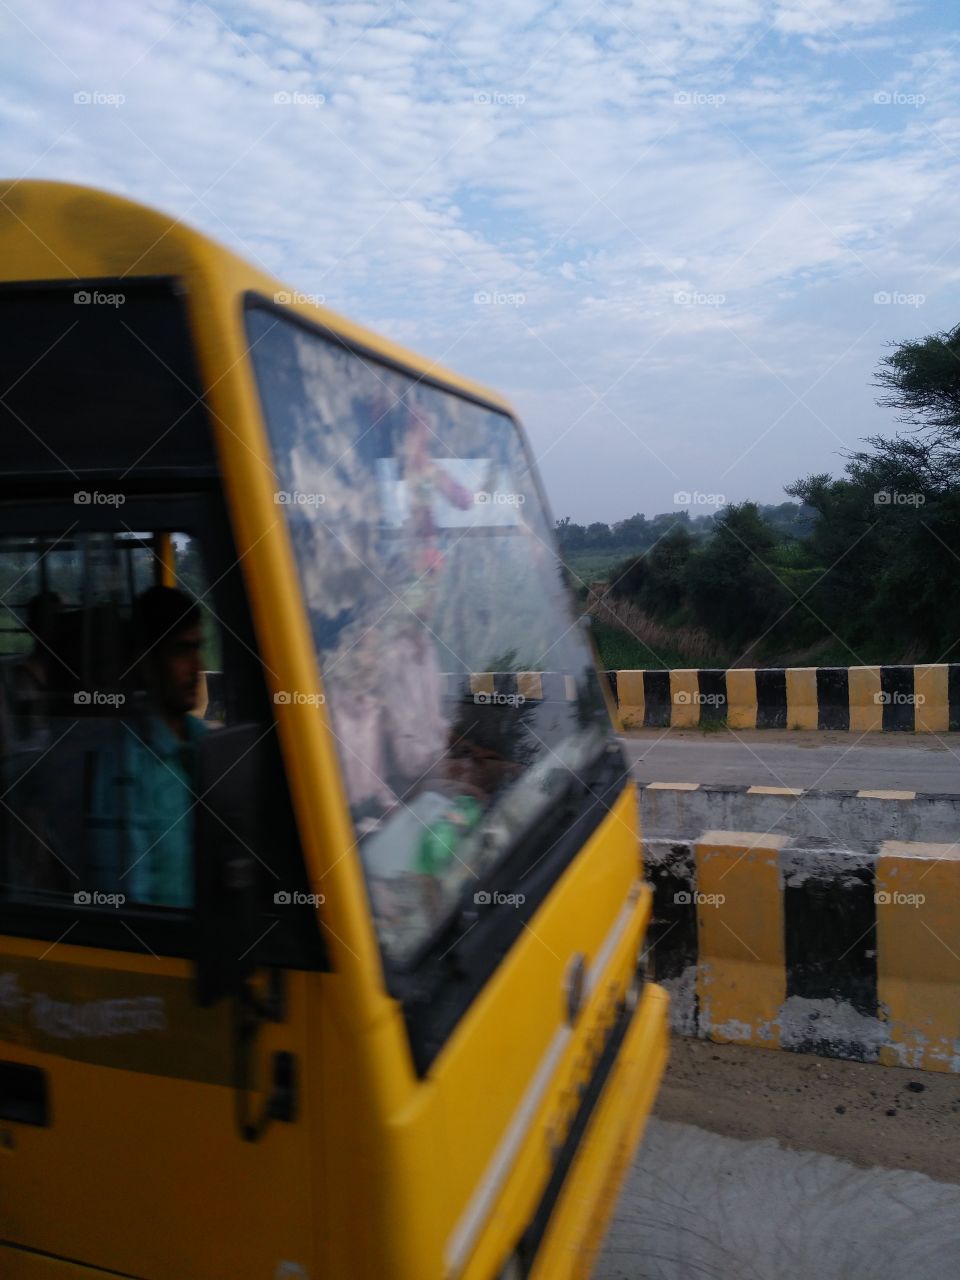 Man driving the school bus